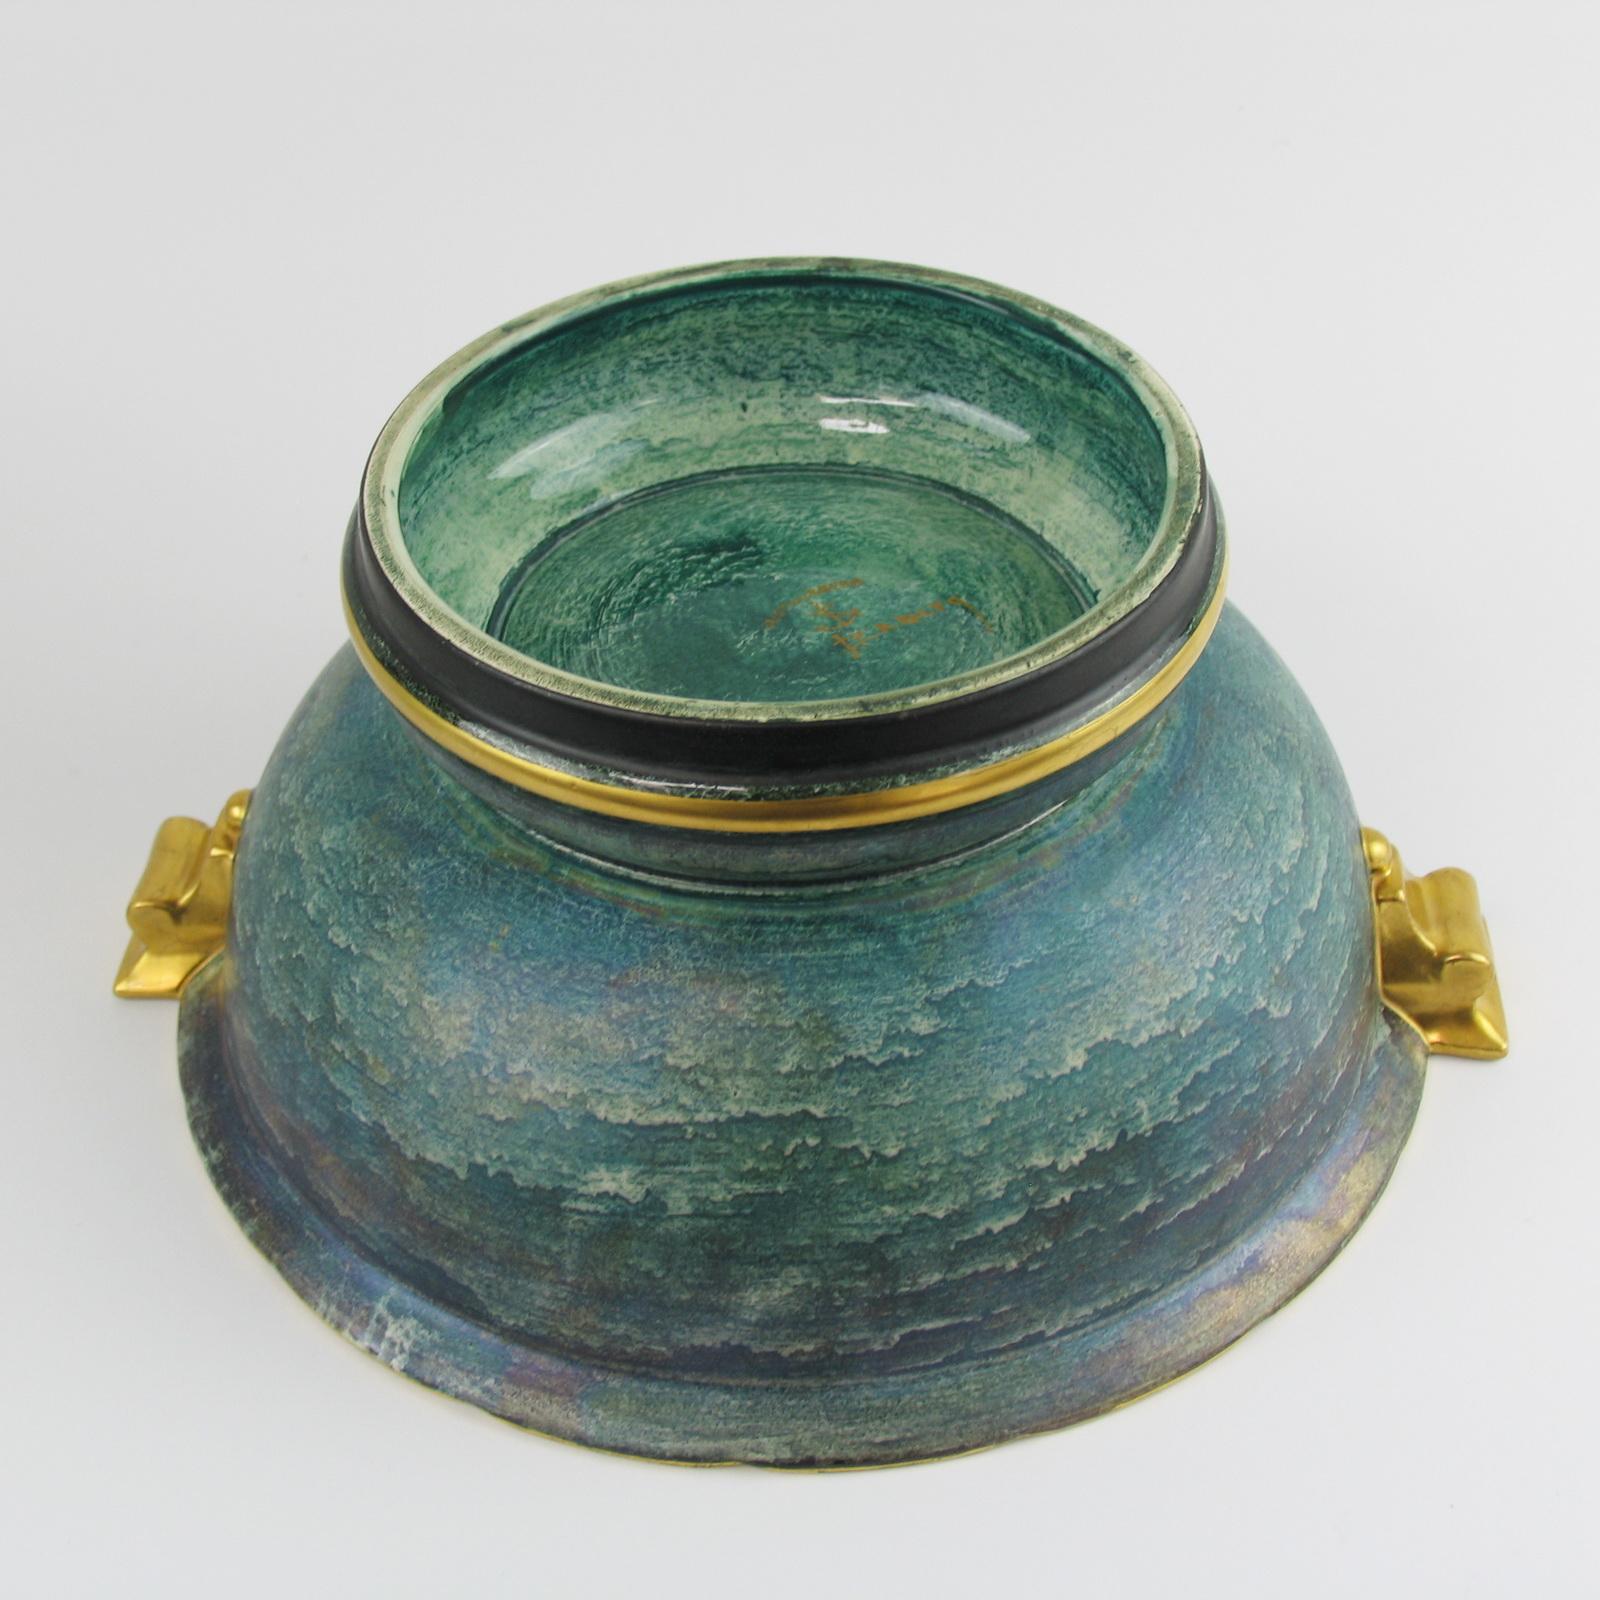 Josef Ekberg Green and Gold Ceramic Footed Bowl, Gustavsberg, Sweden 1930s For Sale 5